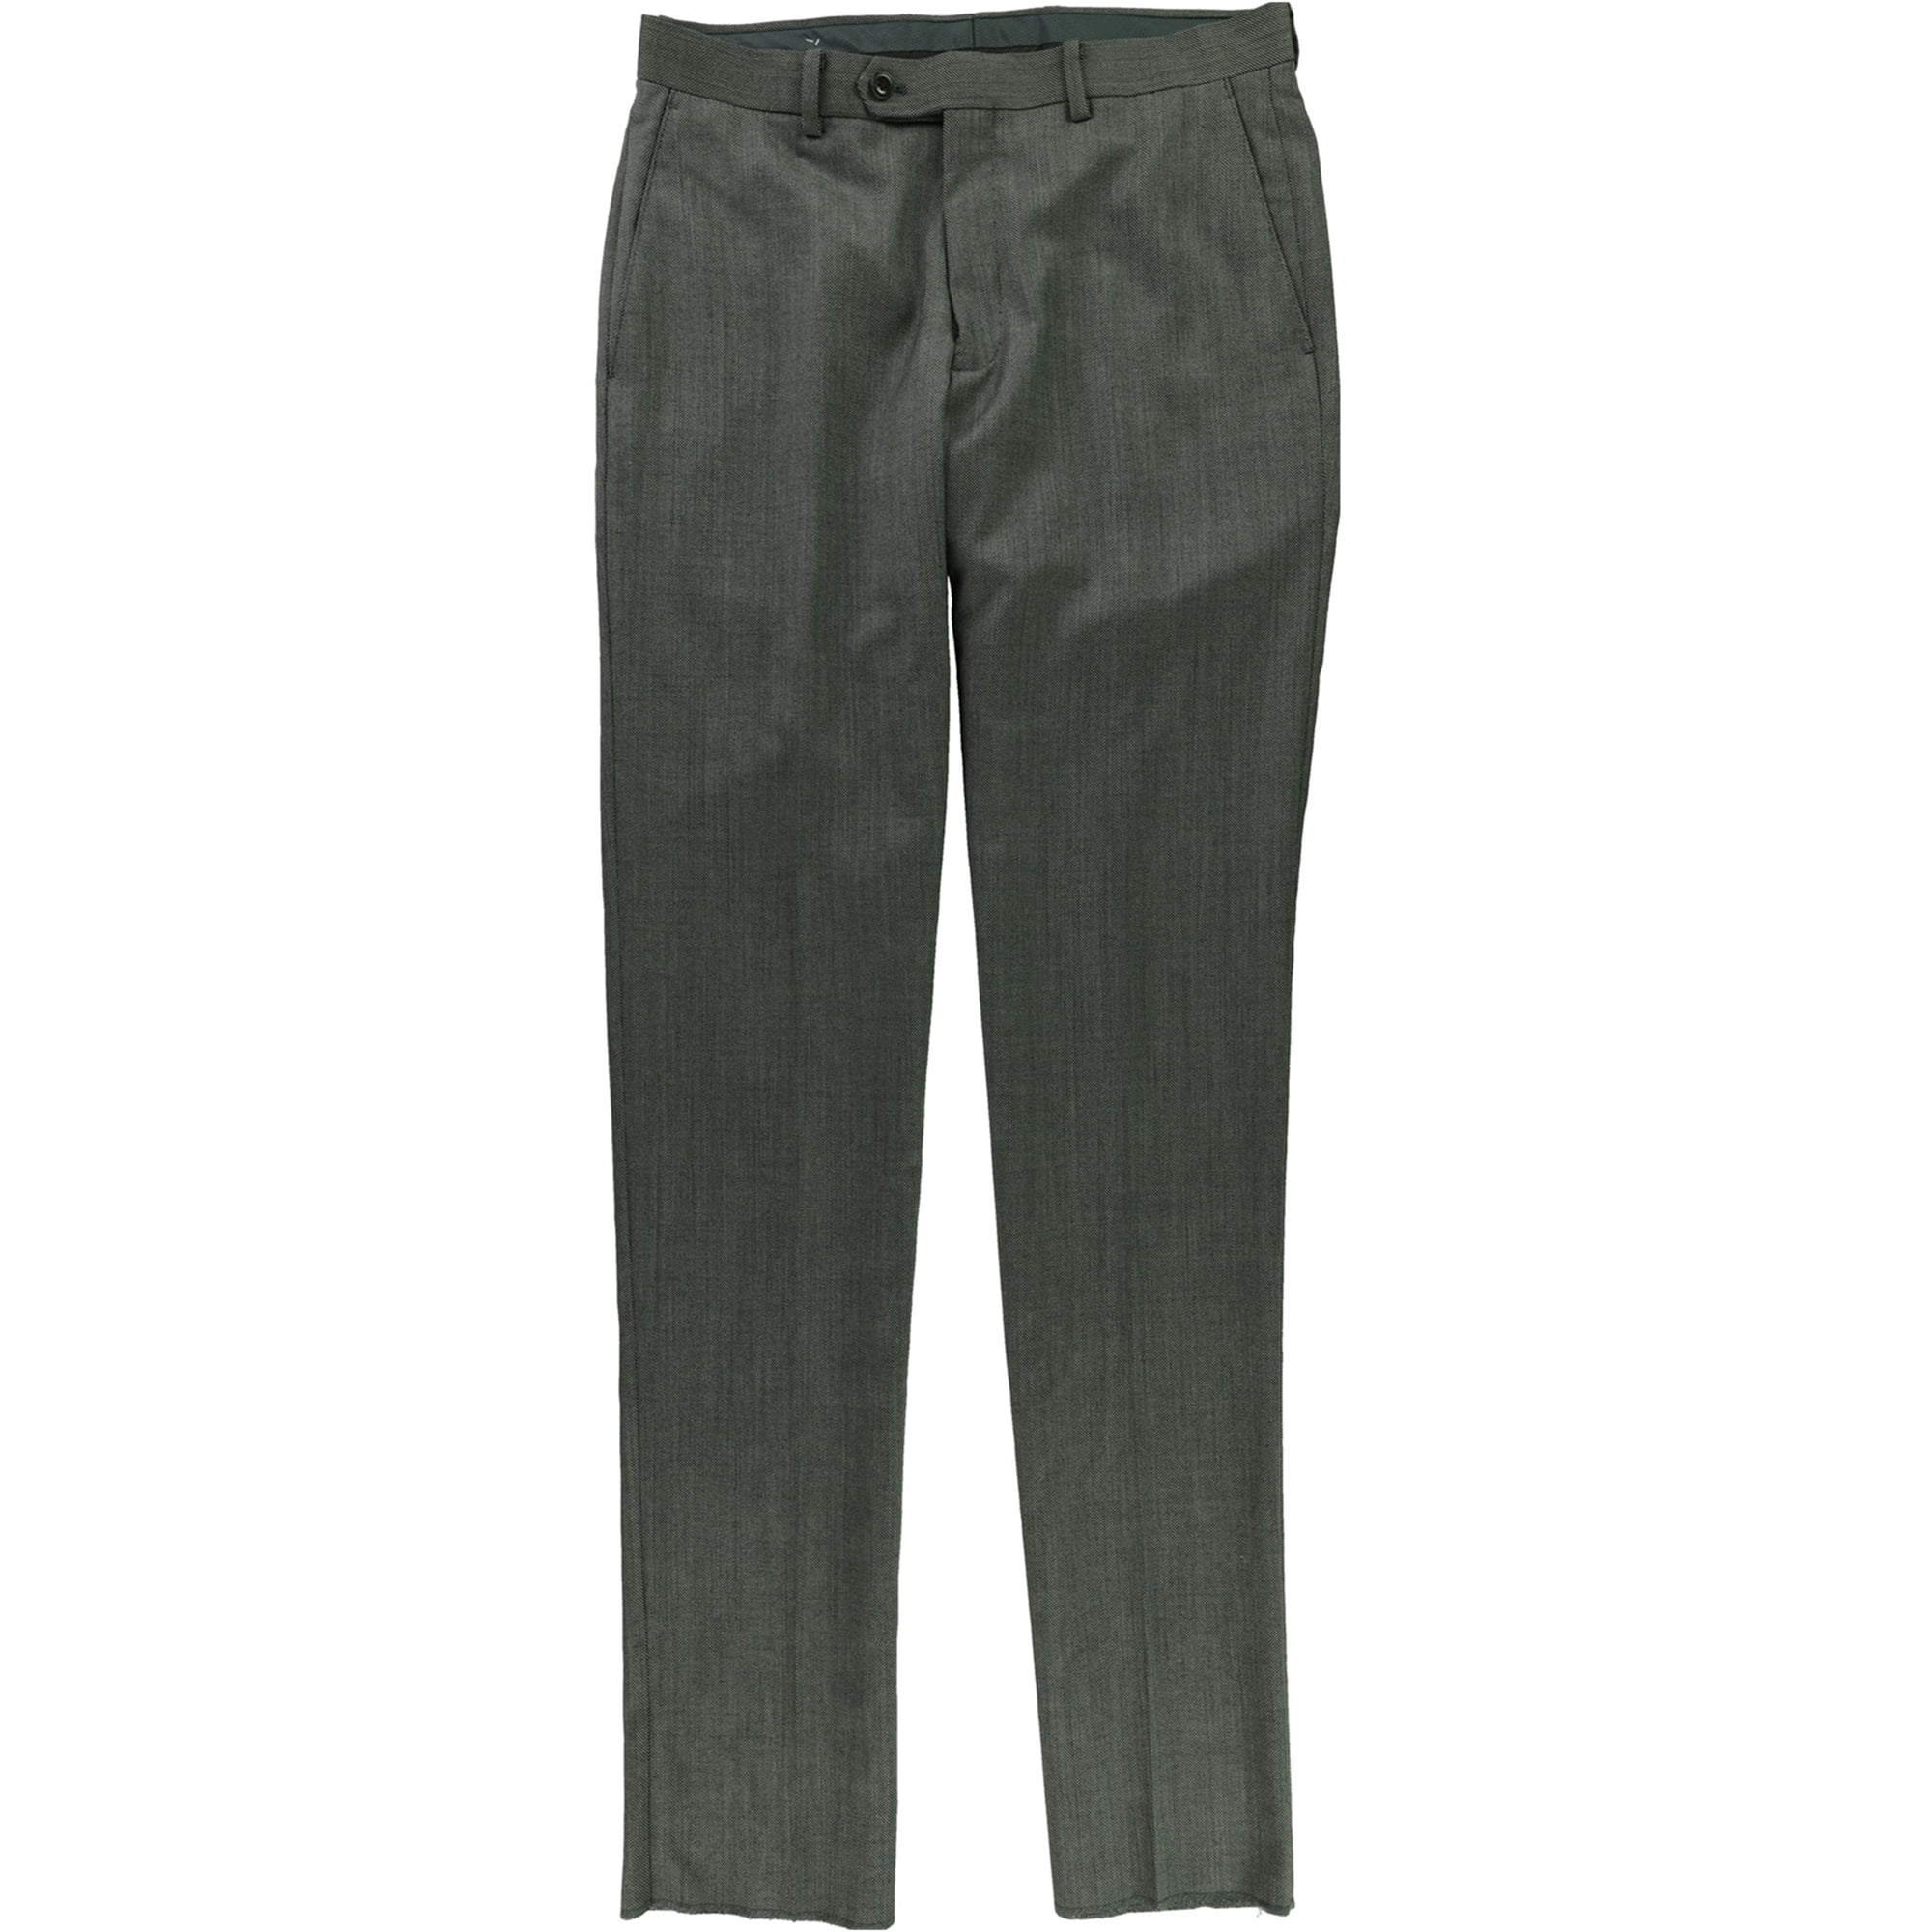 Michael Kors Mens Birdseye Dress Pants Slacks, Grey, 31W x UnfinishedL ...